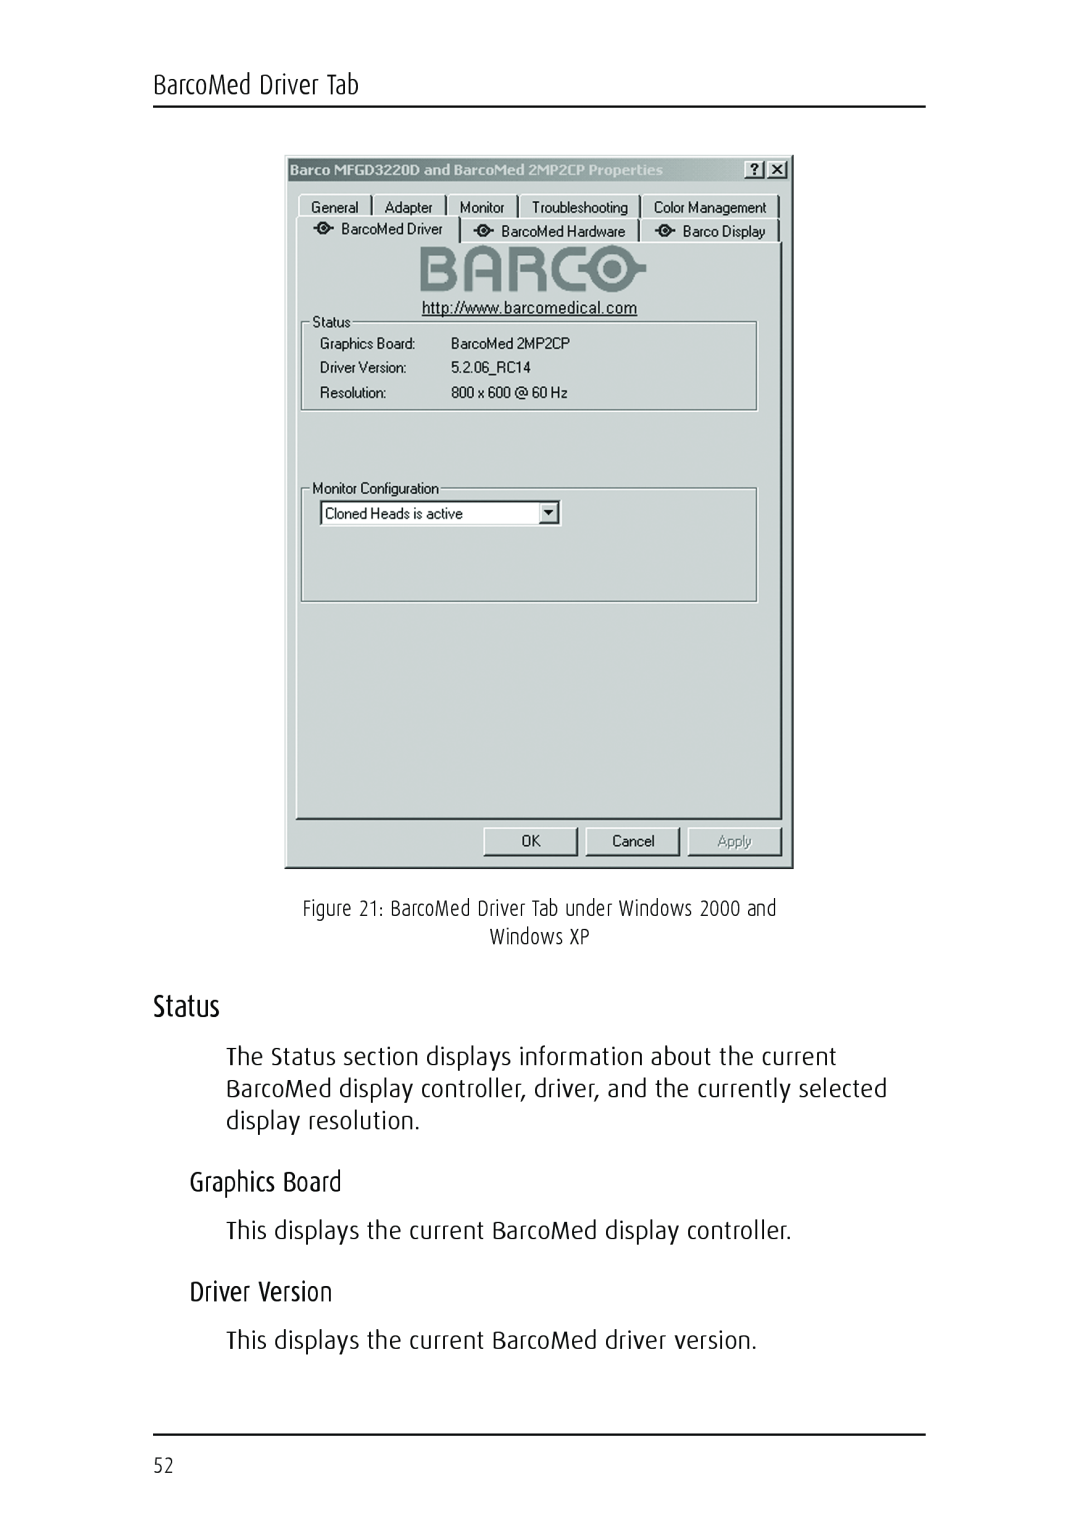 Barco MGP 15 user manual Status, Graphics Board, Driver Version, BarcoMed Driver Tab 